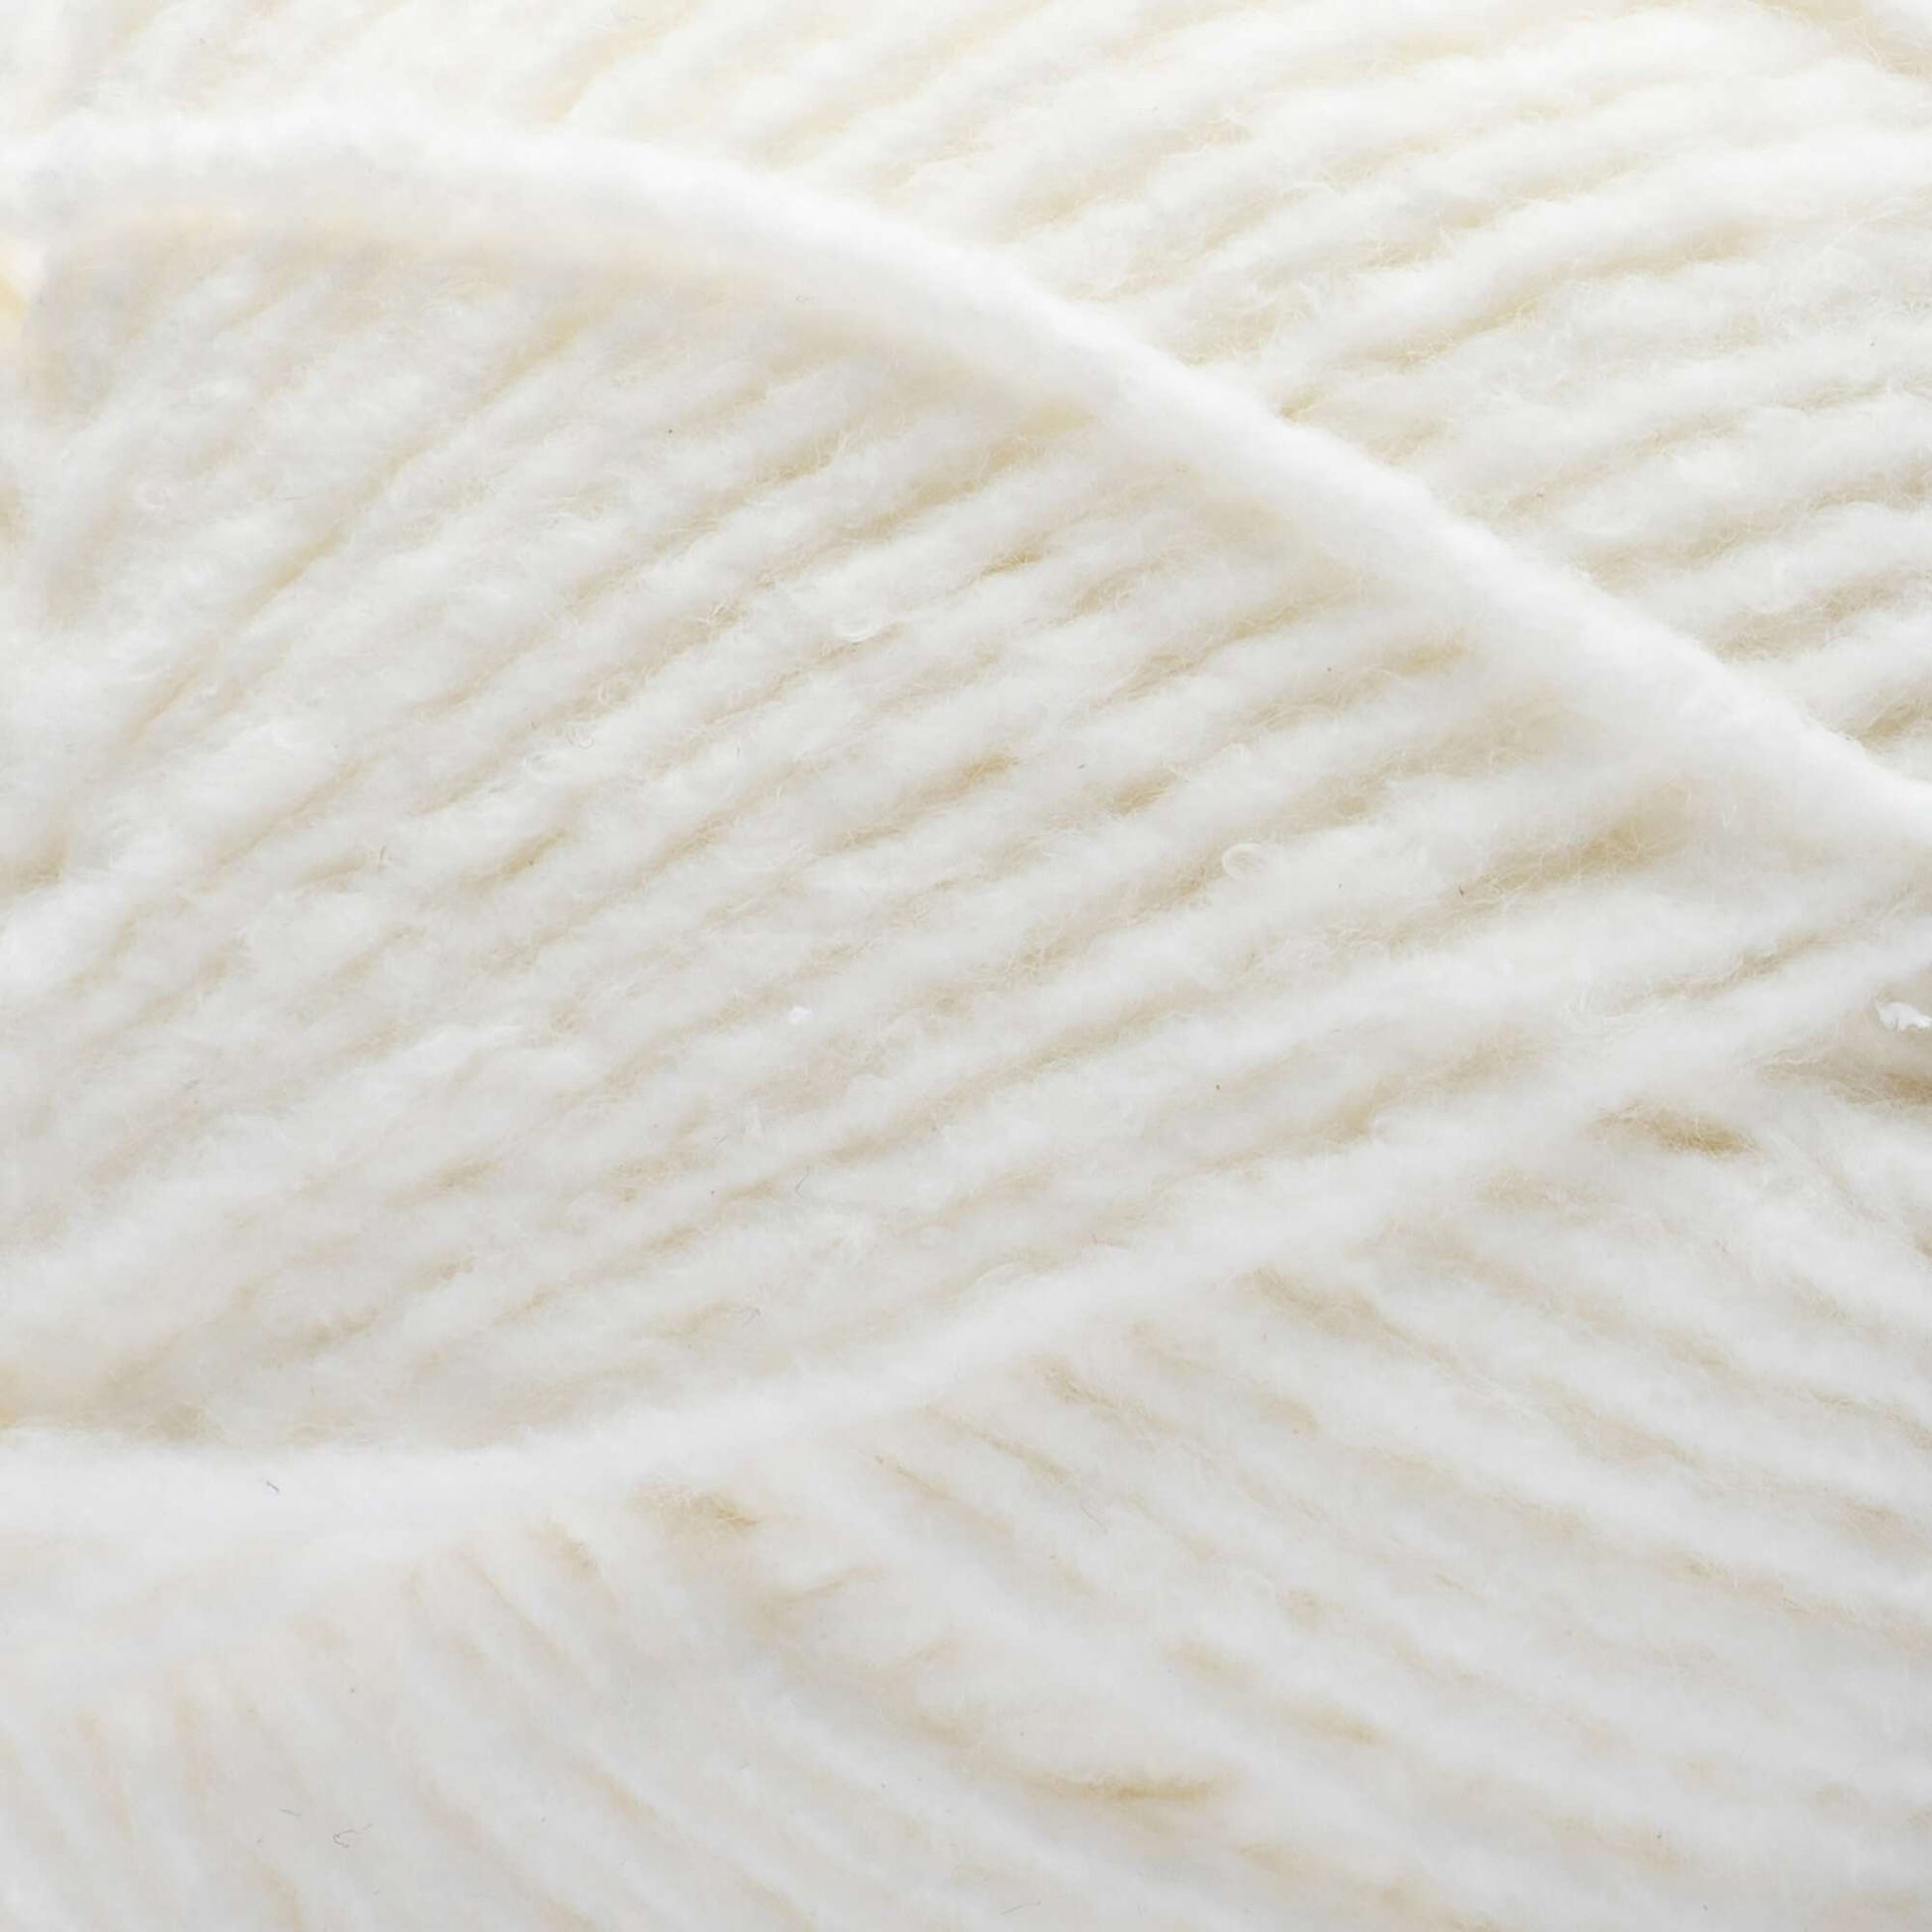 Bernat Forever Fleece Finer Yarn - Discontinued Shades White Cloud